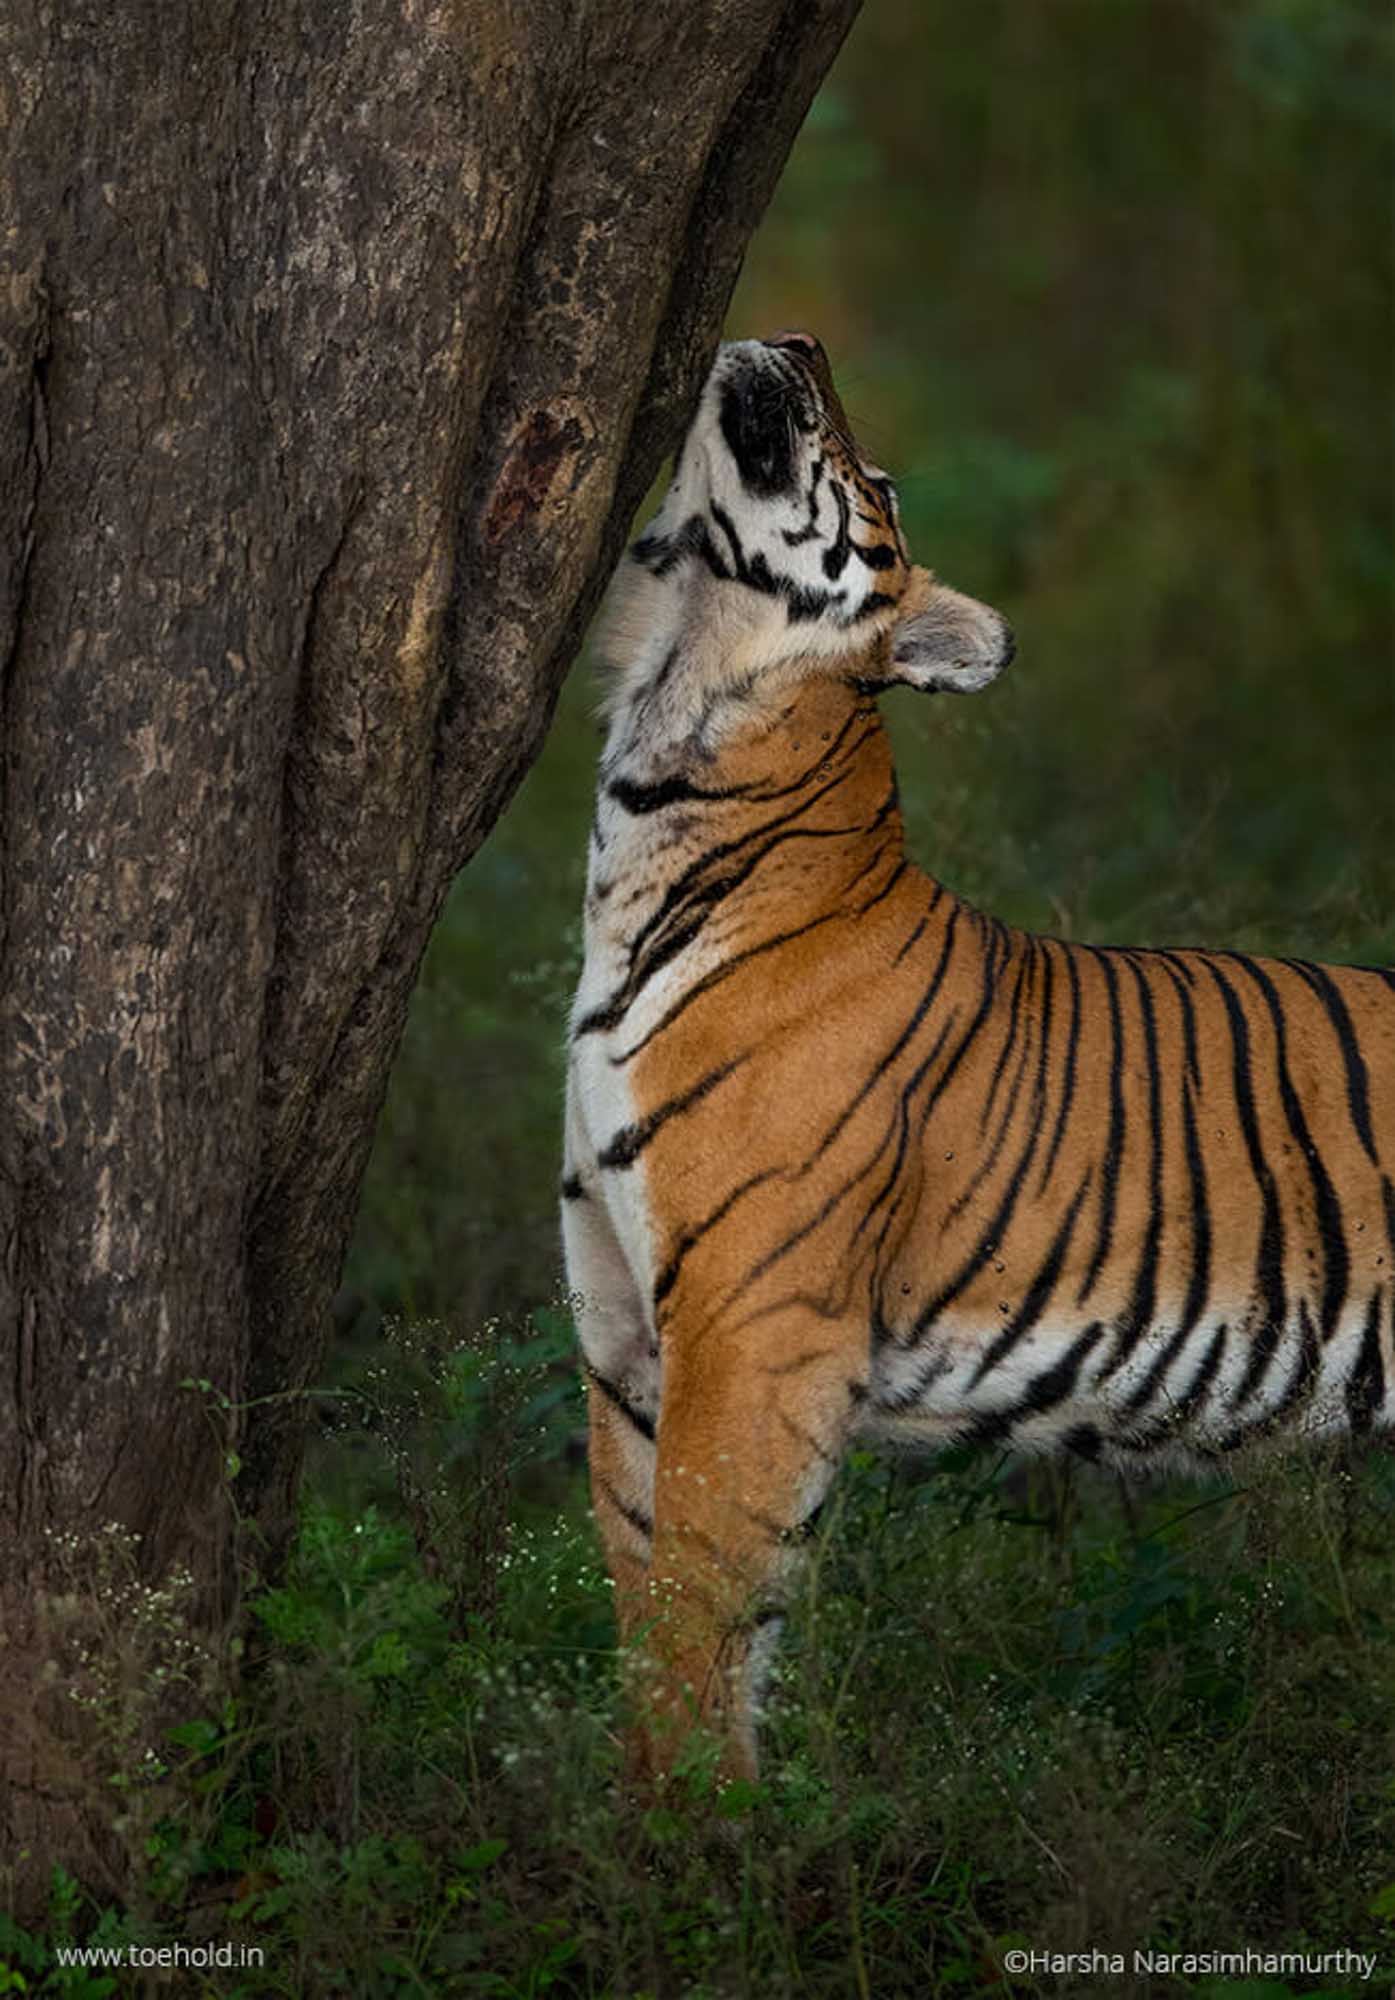 Tiger scent marking